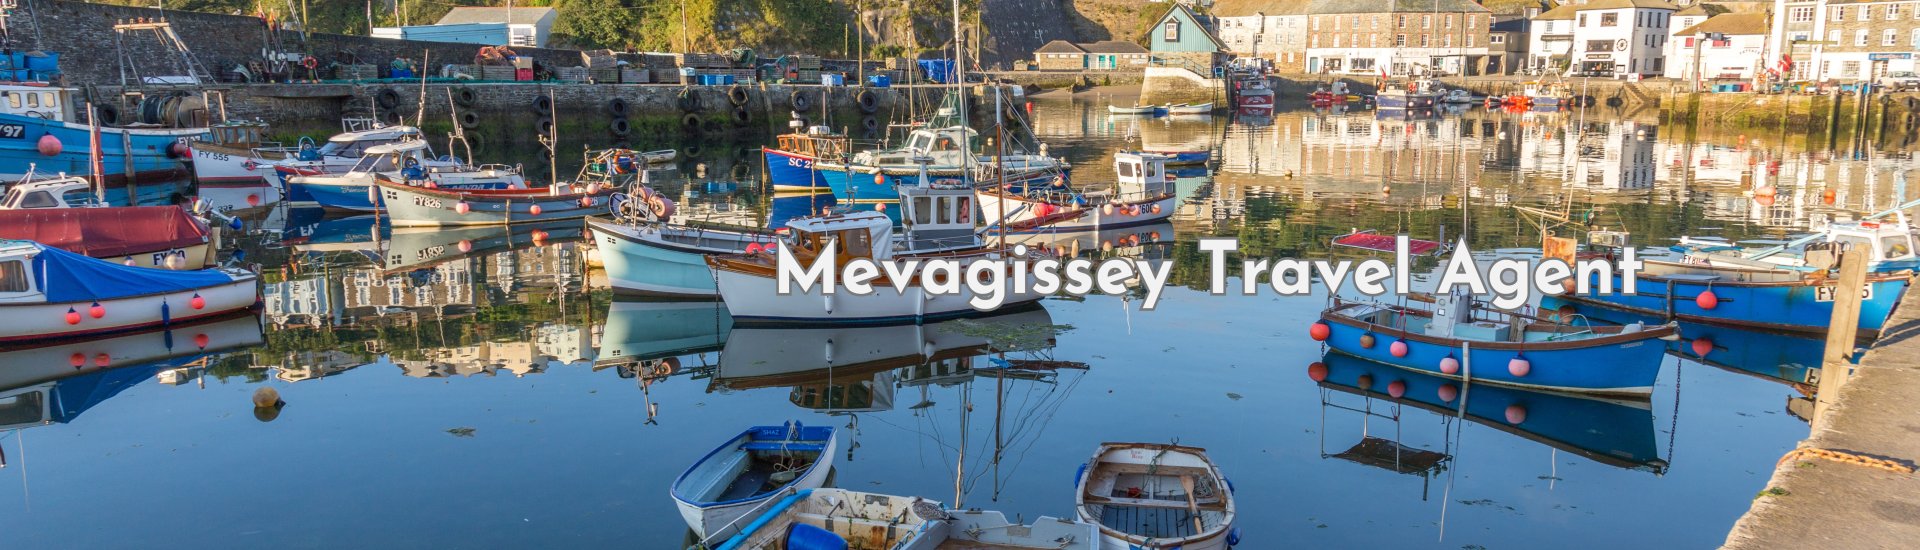 Mevagissey Travel Agent